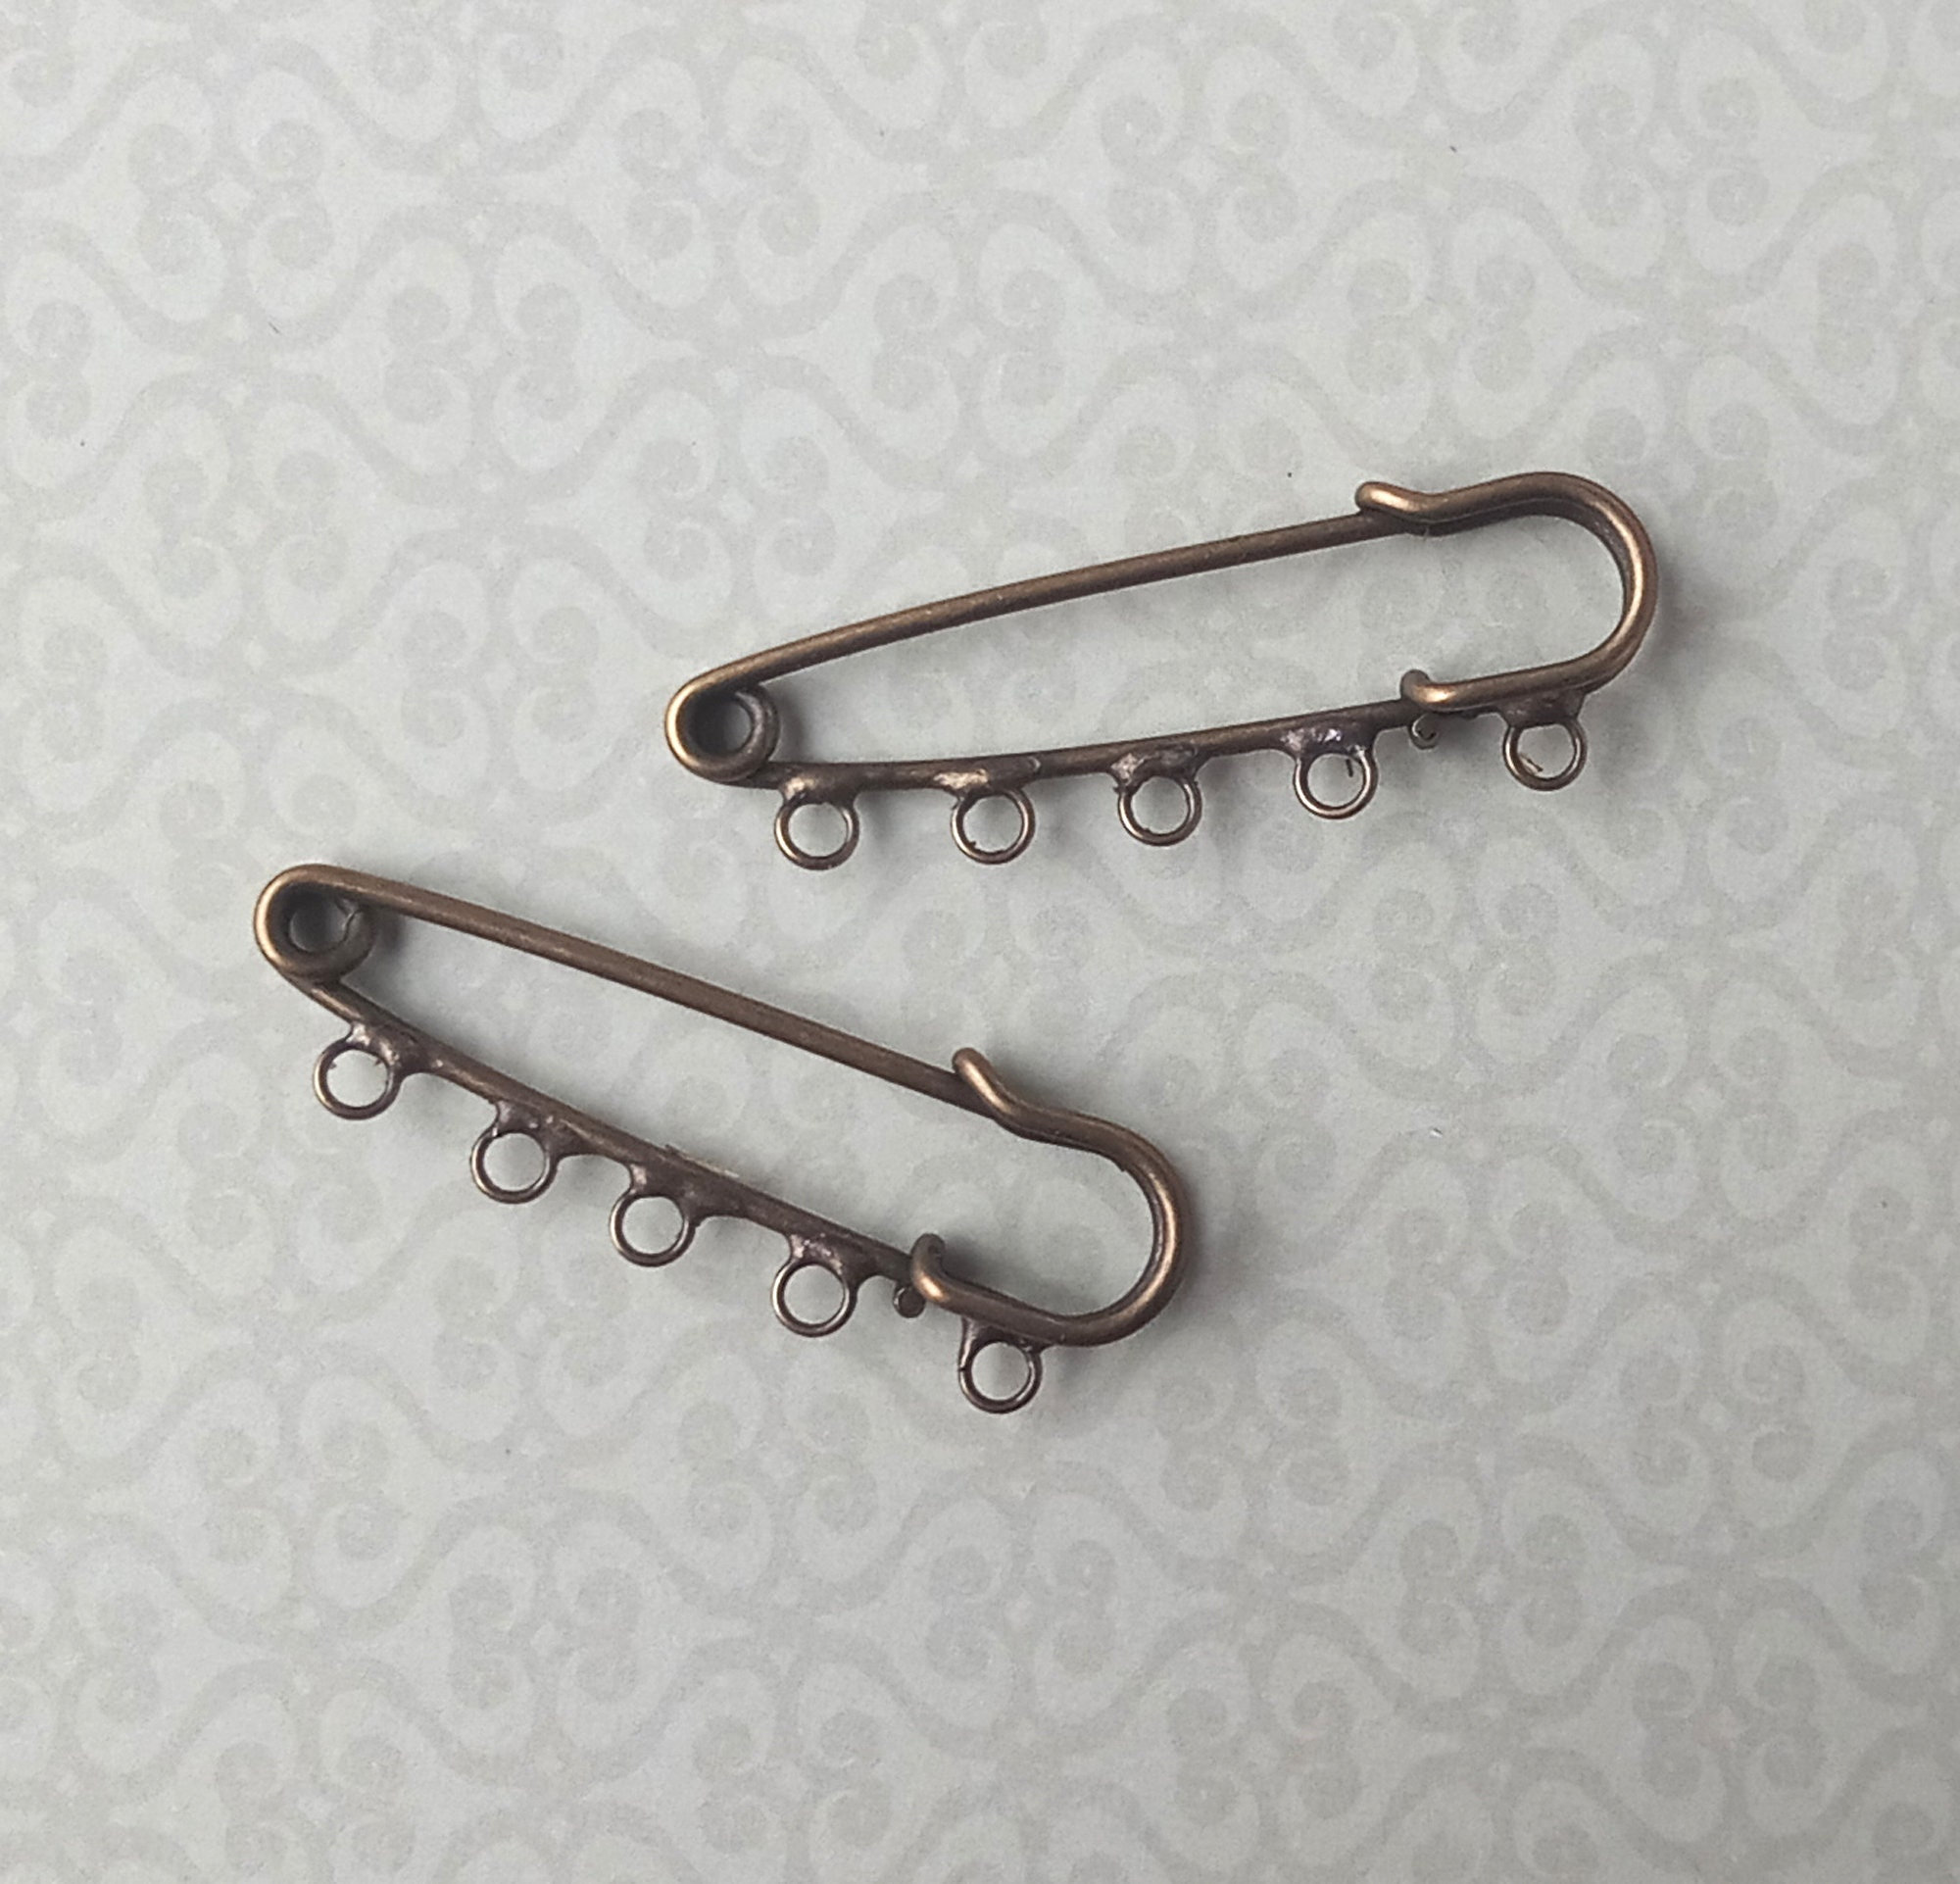 200 Pcs Brooch Backs Flat Bar Pins 1 Inch, Safety Pin Backs Findings with 3  Holes Tone Bar Pin Backs for DIY Crafts Jewelry Making Making Corsage